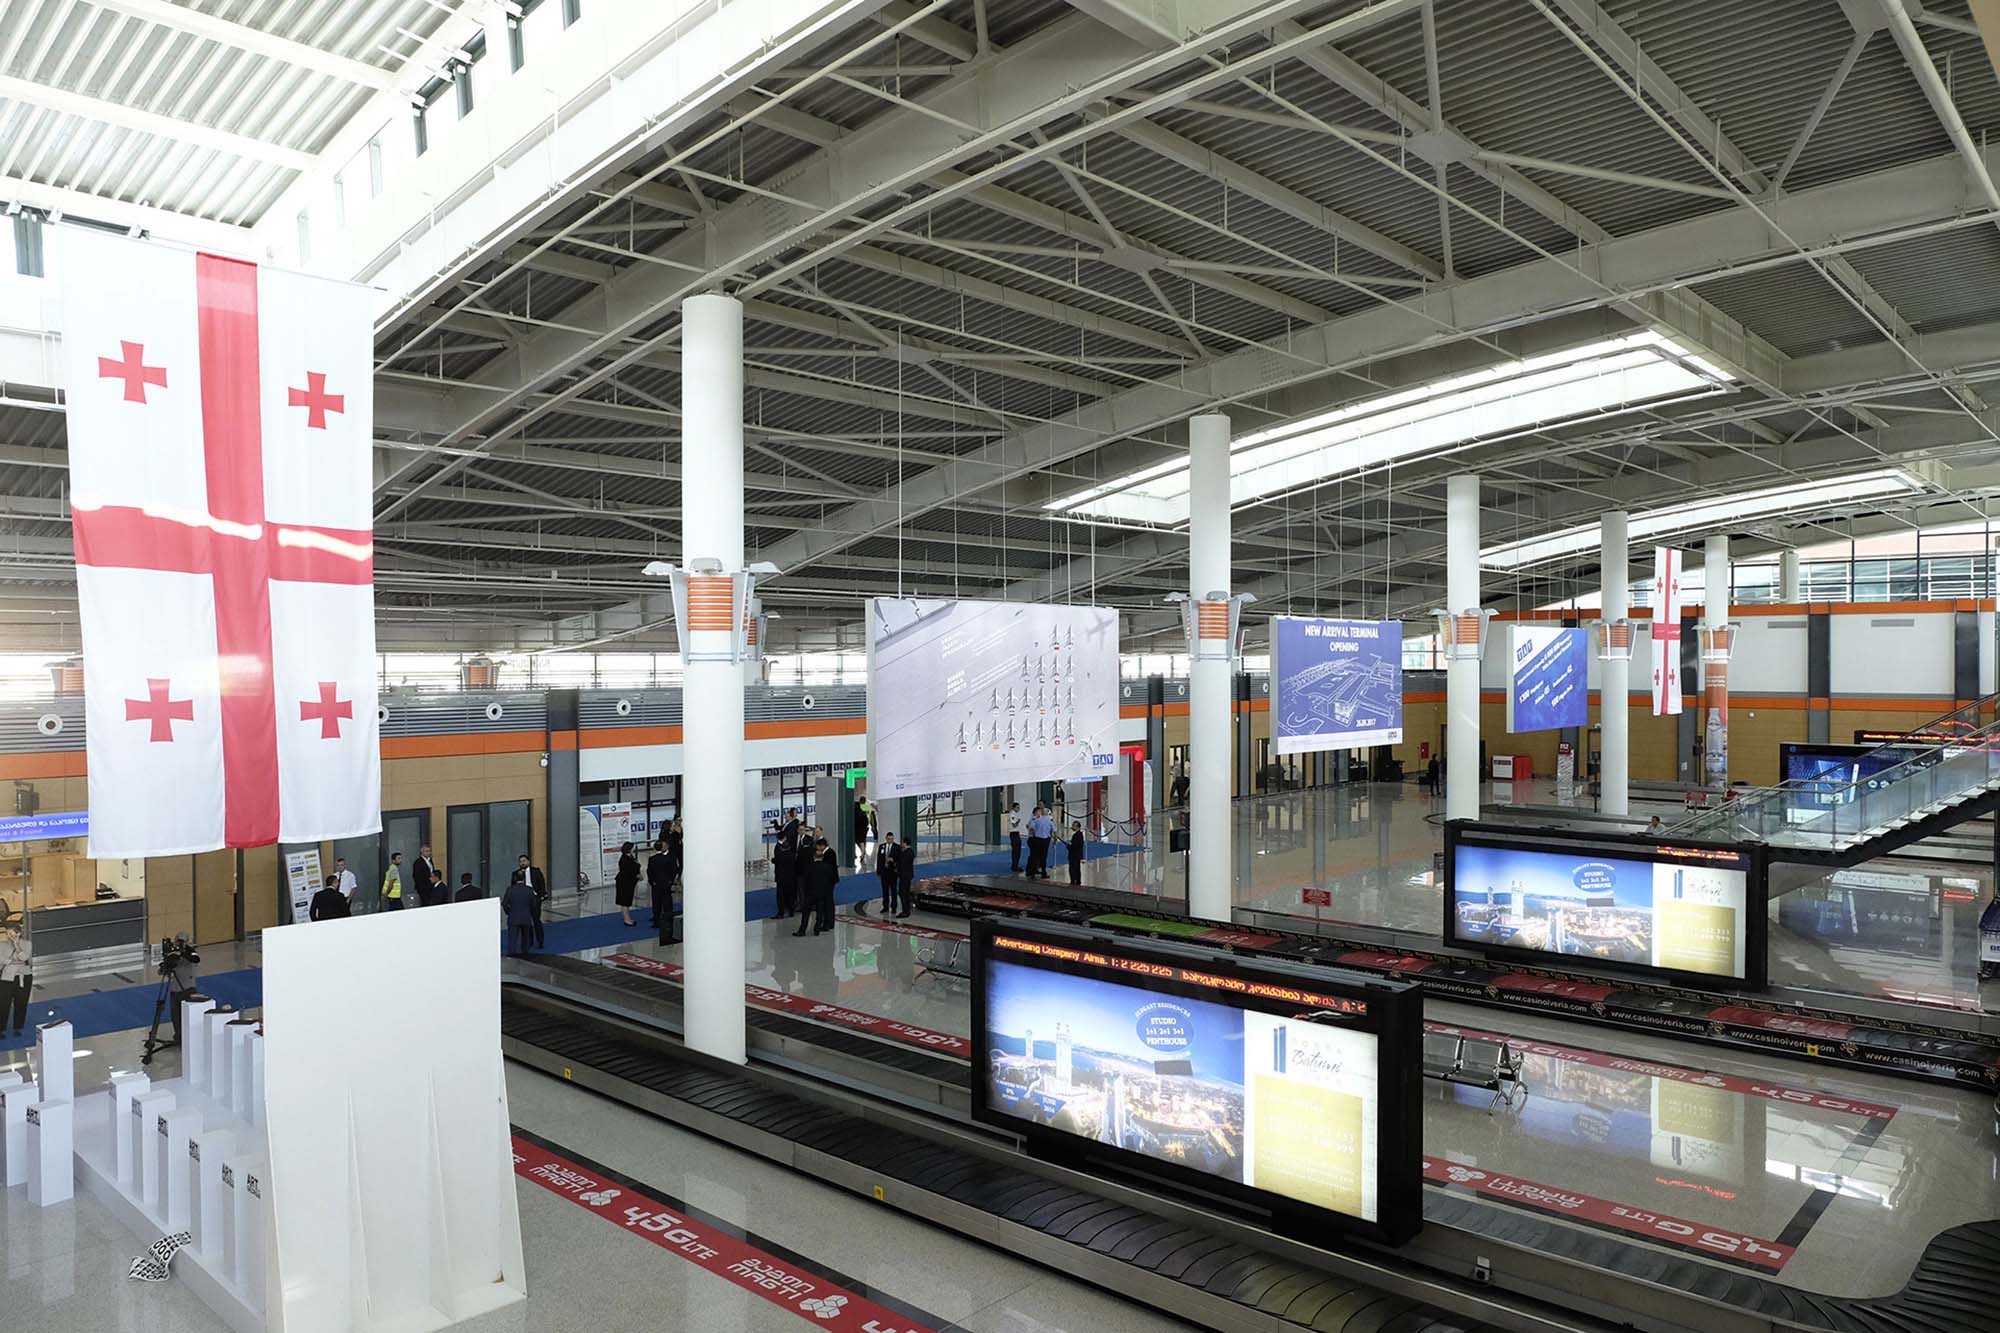 тбилиси поселок аэропорт